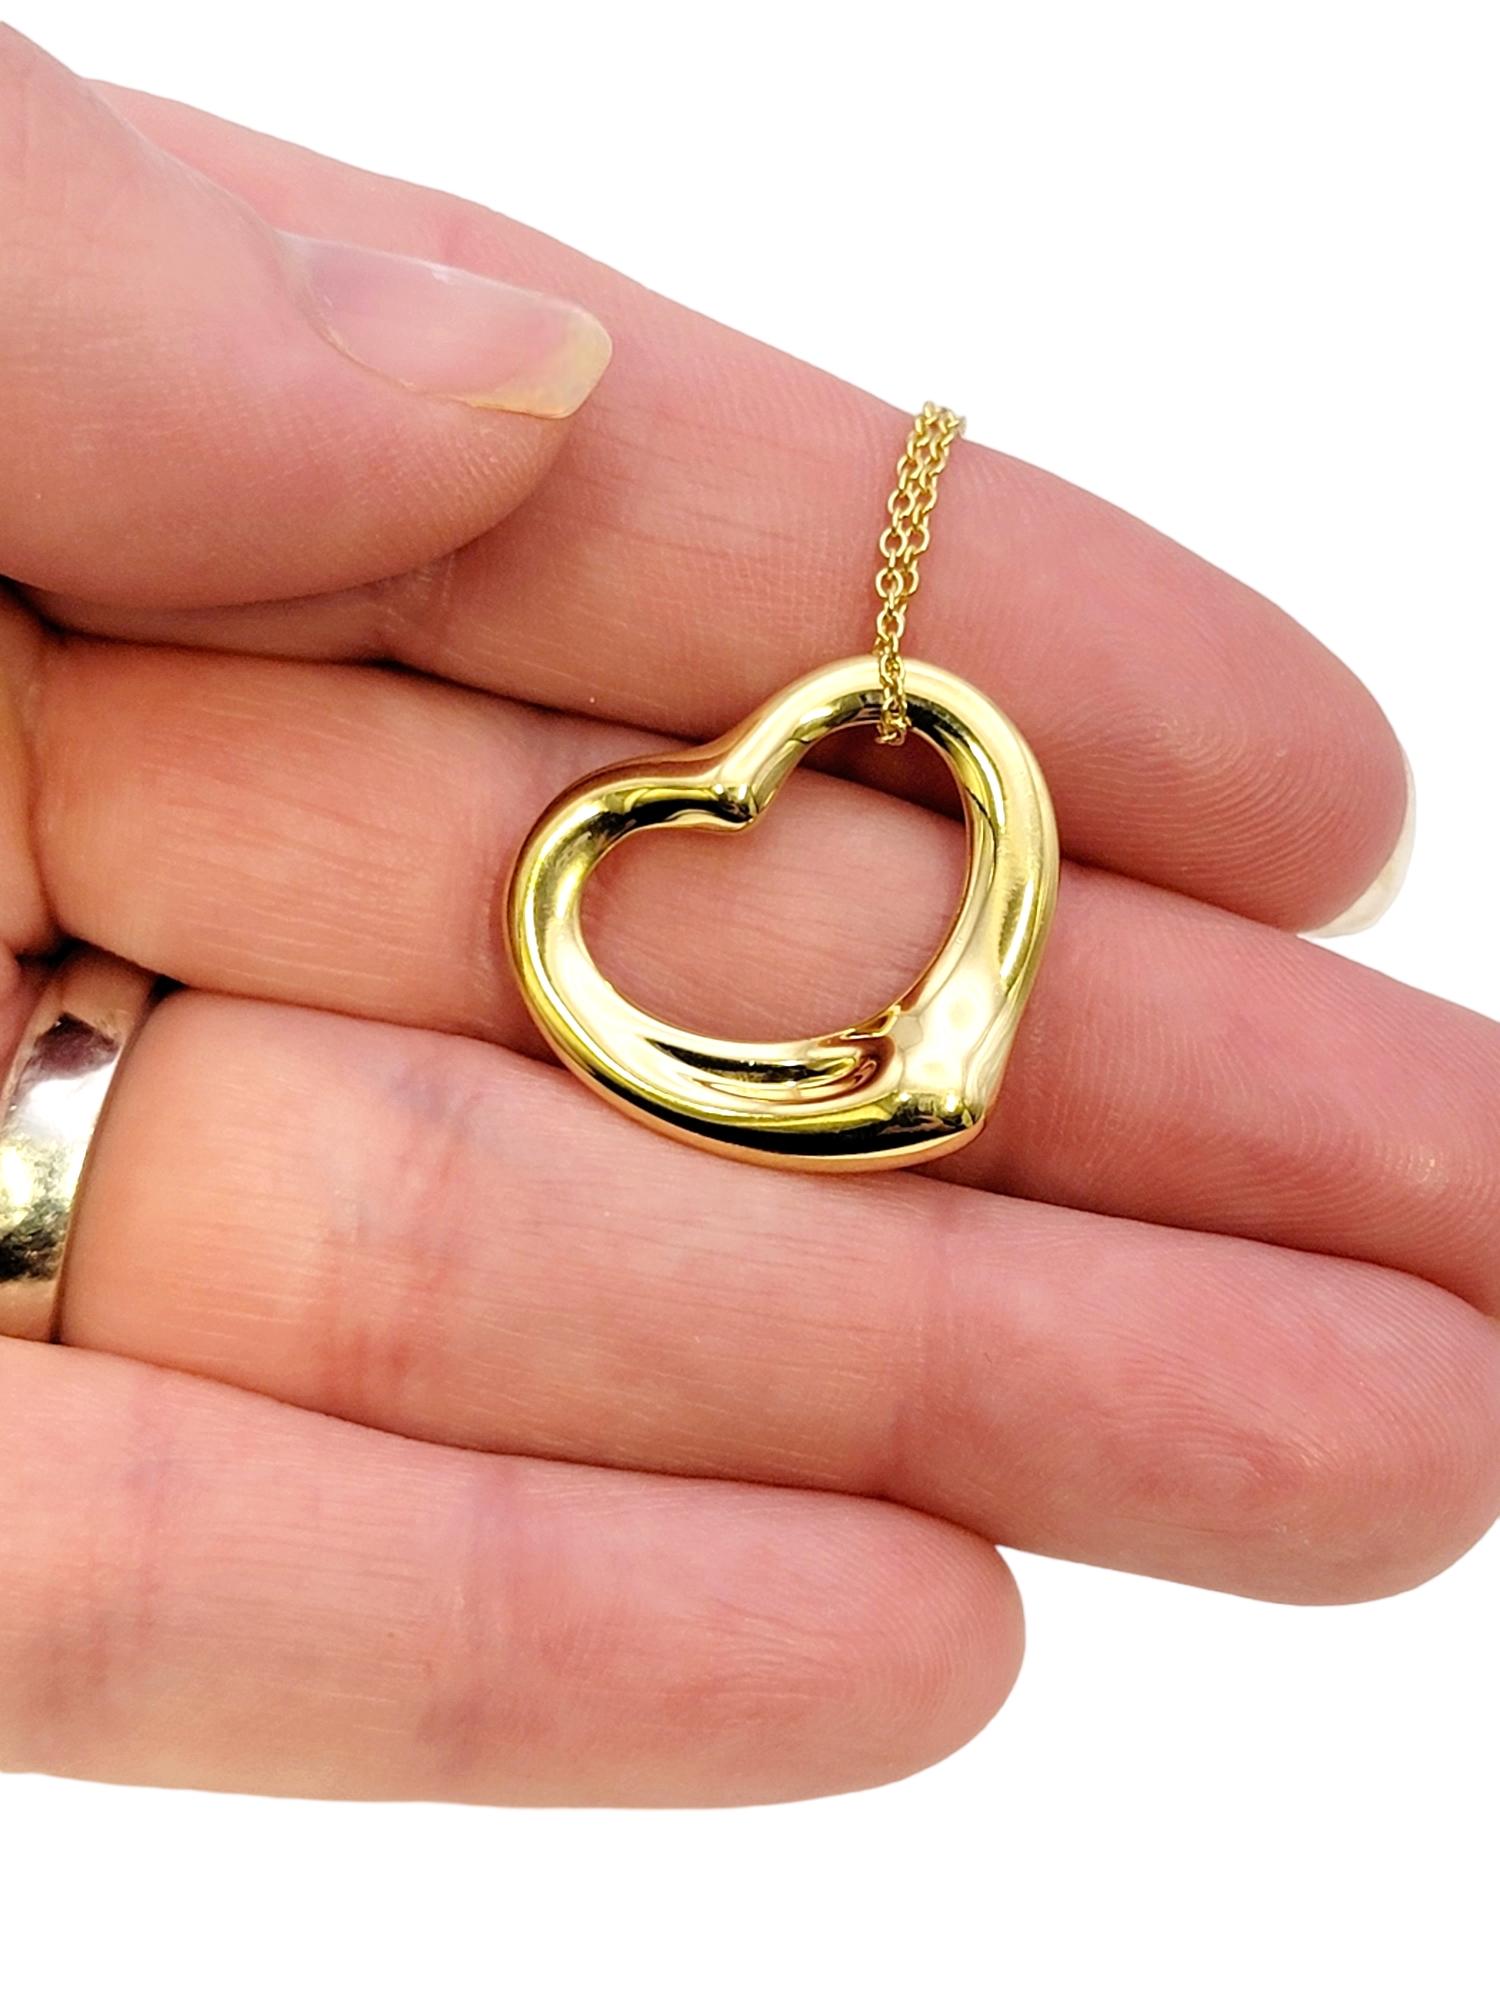 Elsa Peretti for Tiffany & Co. 18 Karat Yellow Gold Open Heart Pendant Necklace For Sale 6